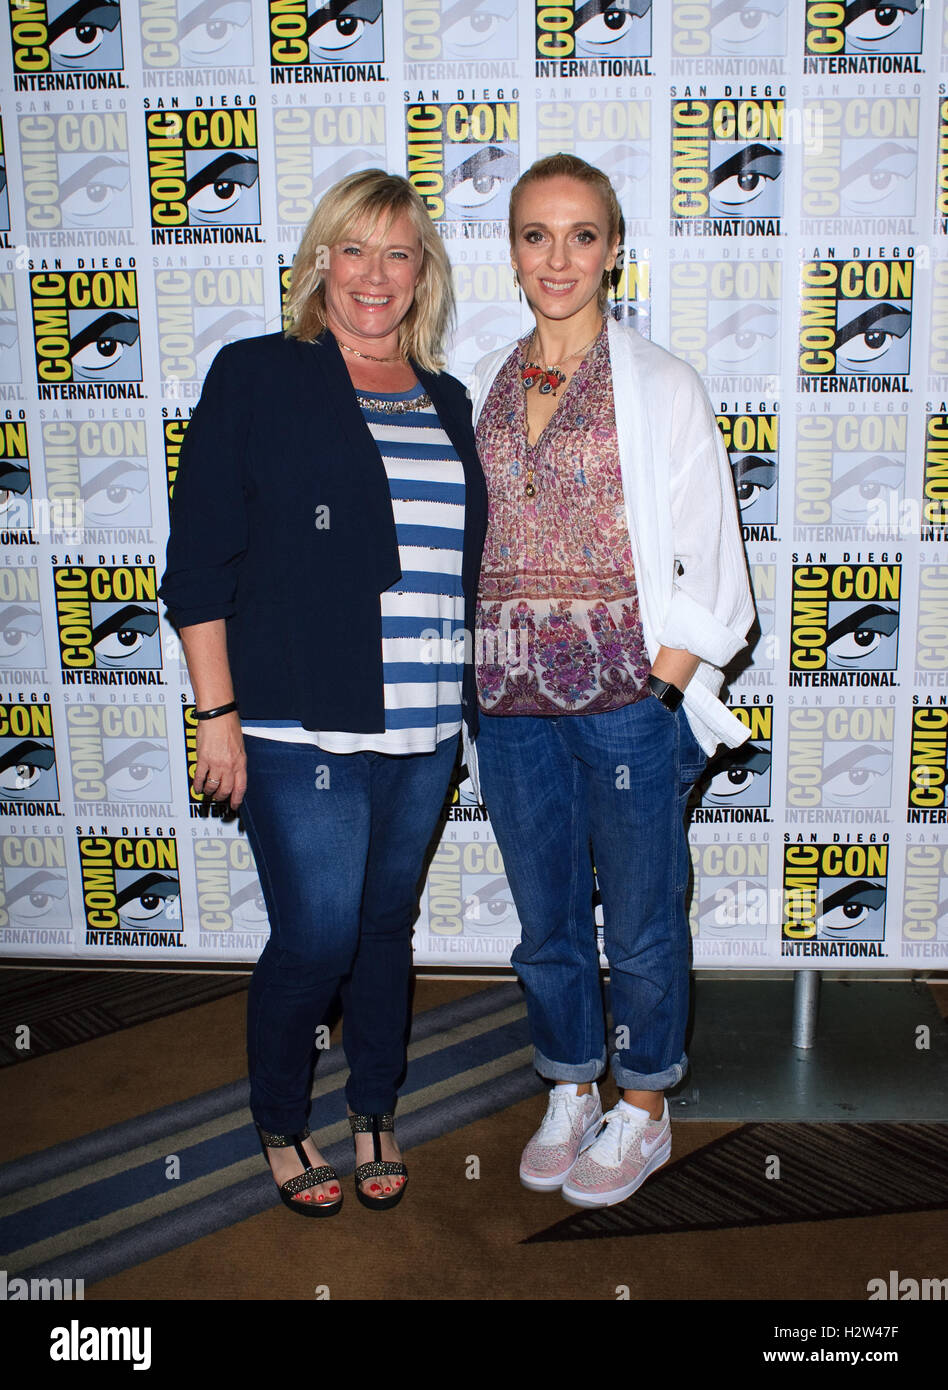 San Diego Comic-Con - 'Sherlock' - Photocall  Featuring: Amanda Abbington, Sue Vertue Where: San Diego, California, United States When: 24 Jul 2016 Stock Photo